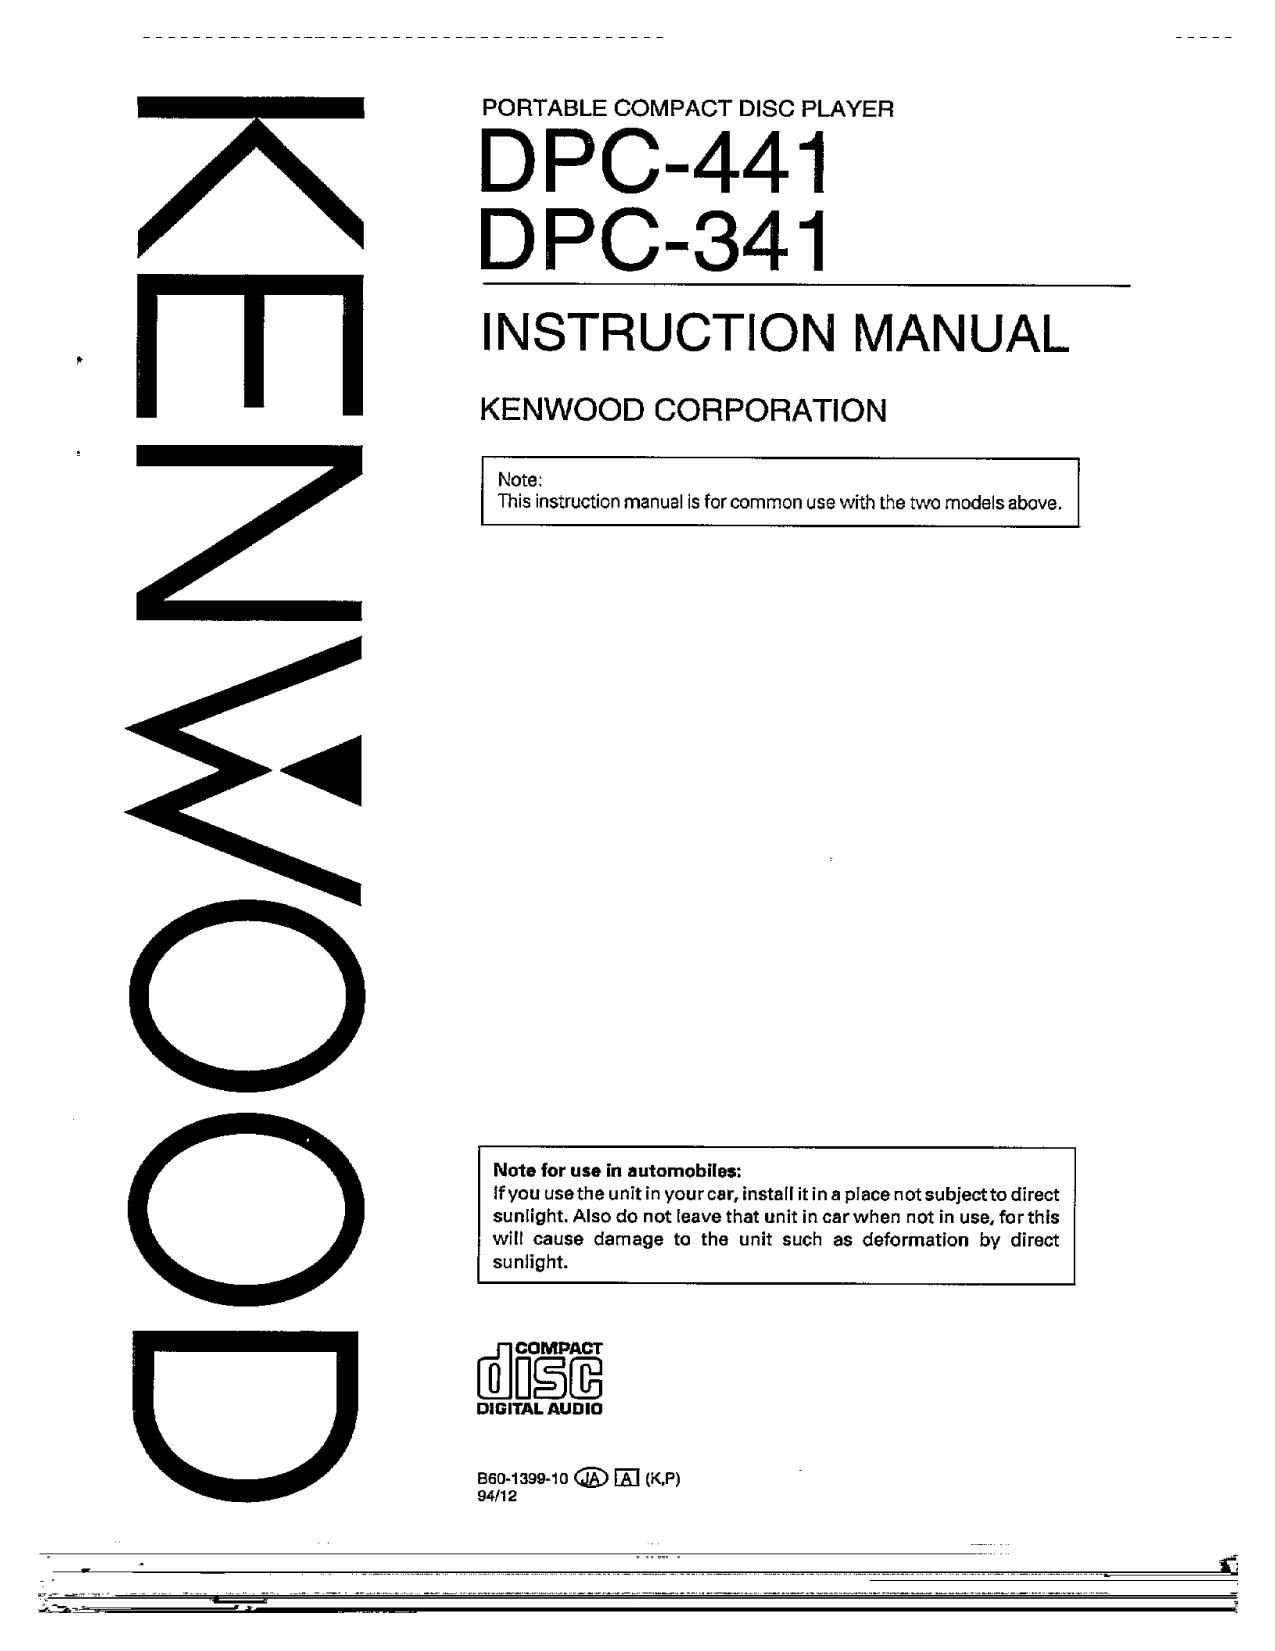 Kenwood DPC 441 Owners Manual